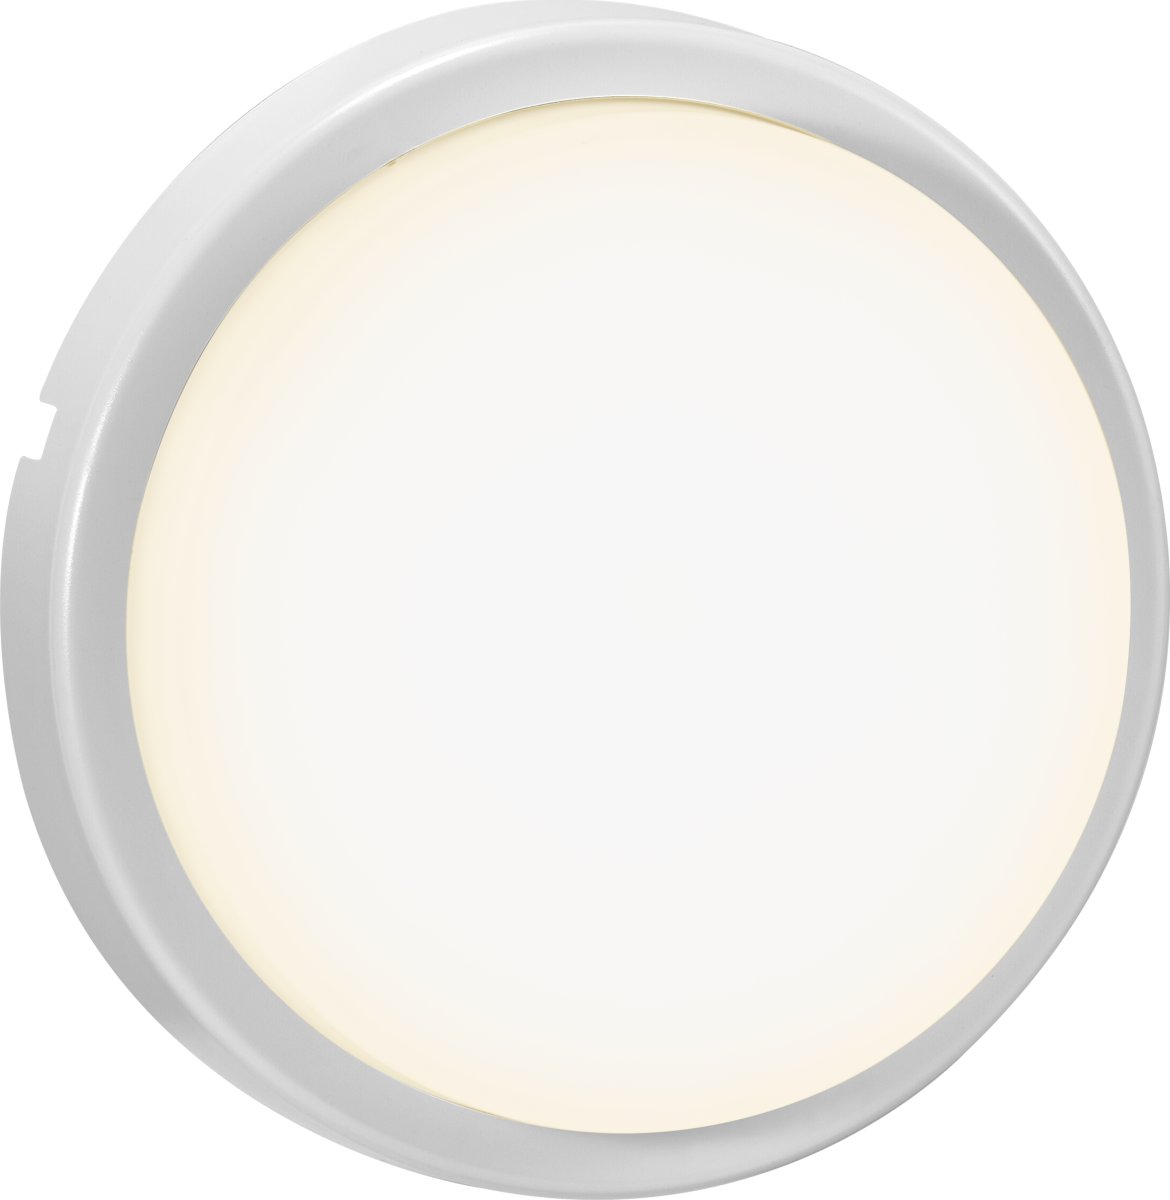 Nordlux Cuba Bright Round væglampe, Hvid